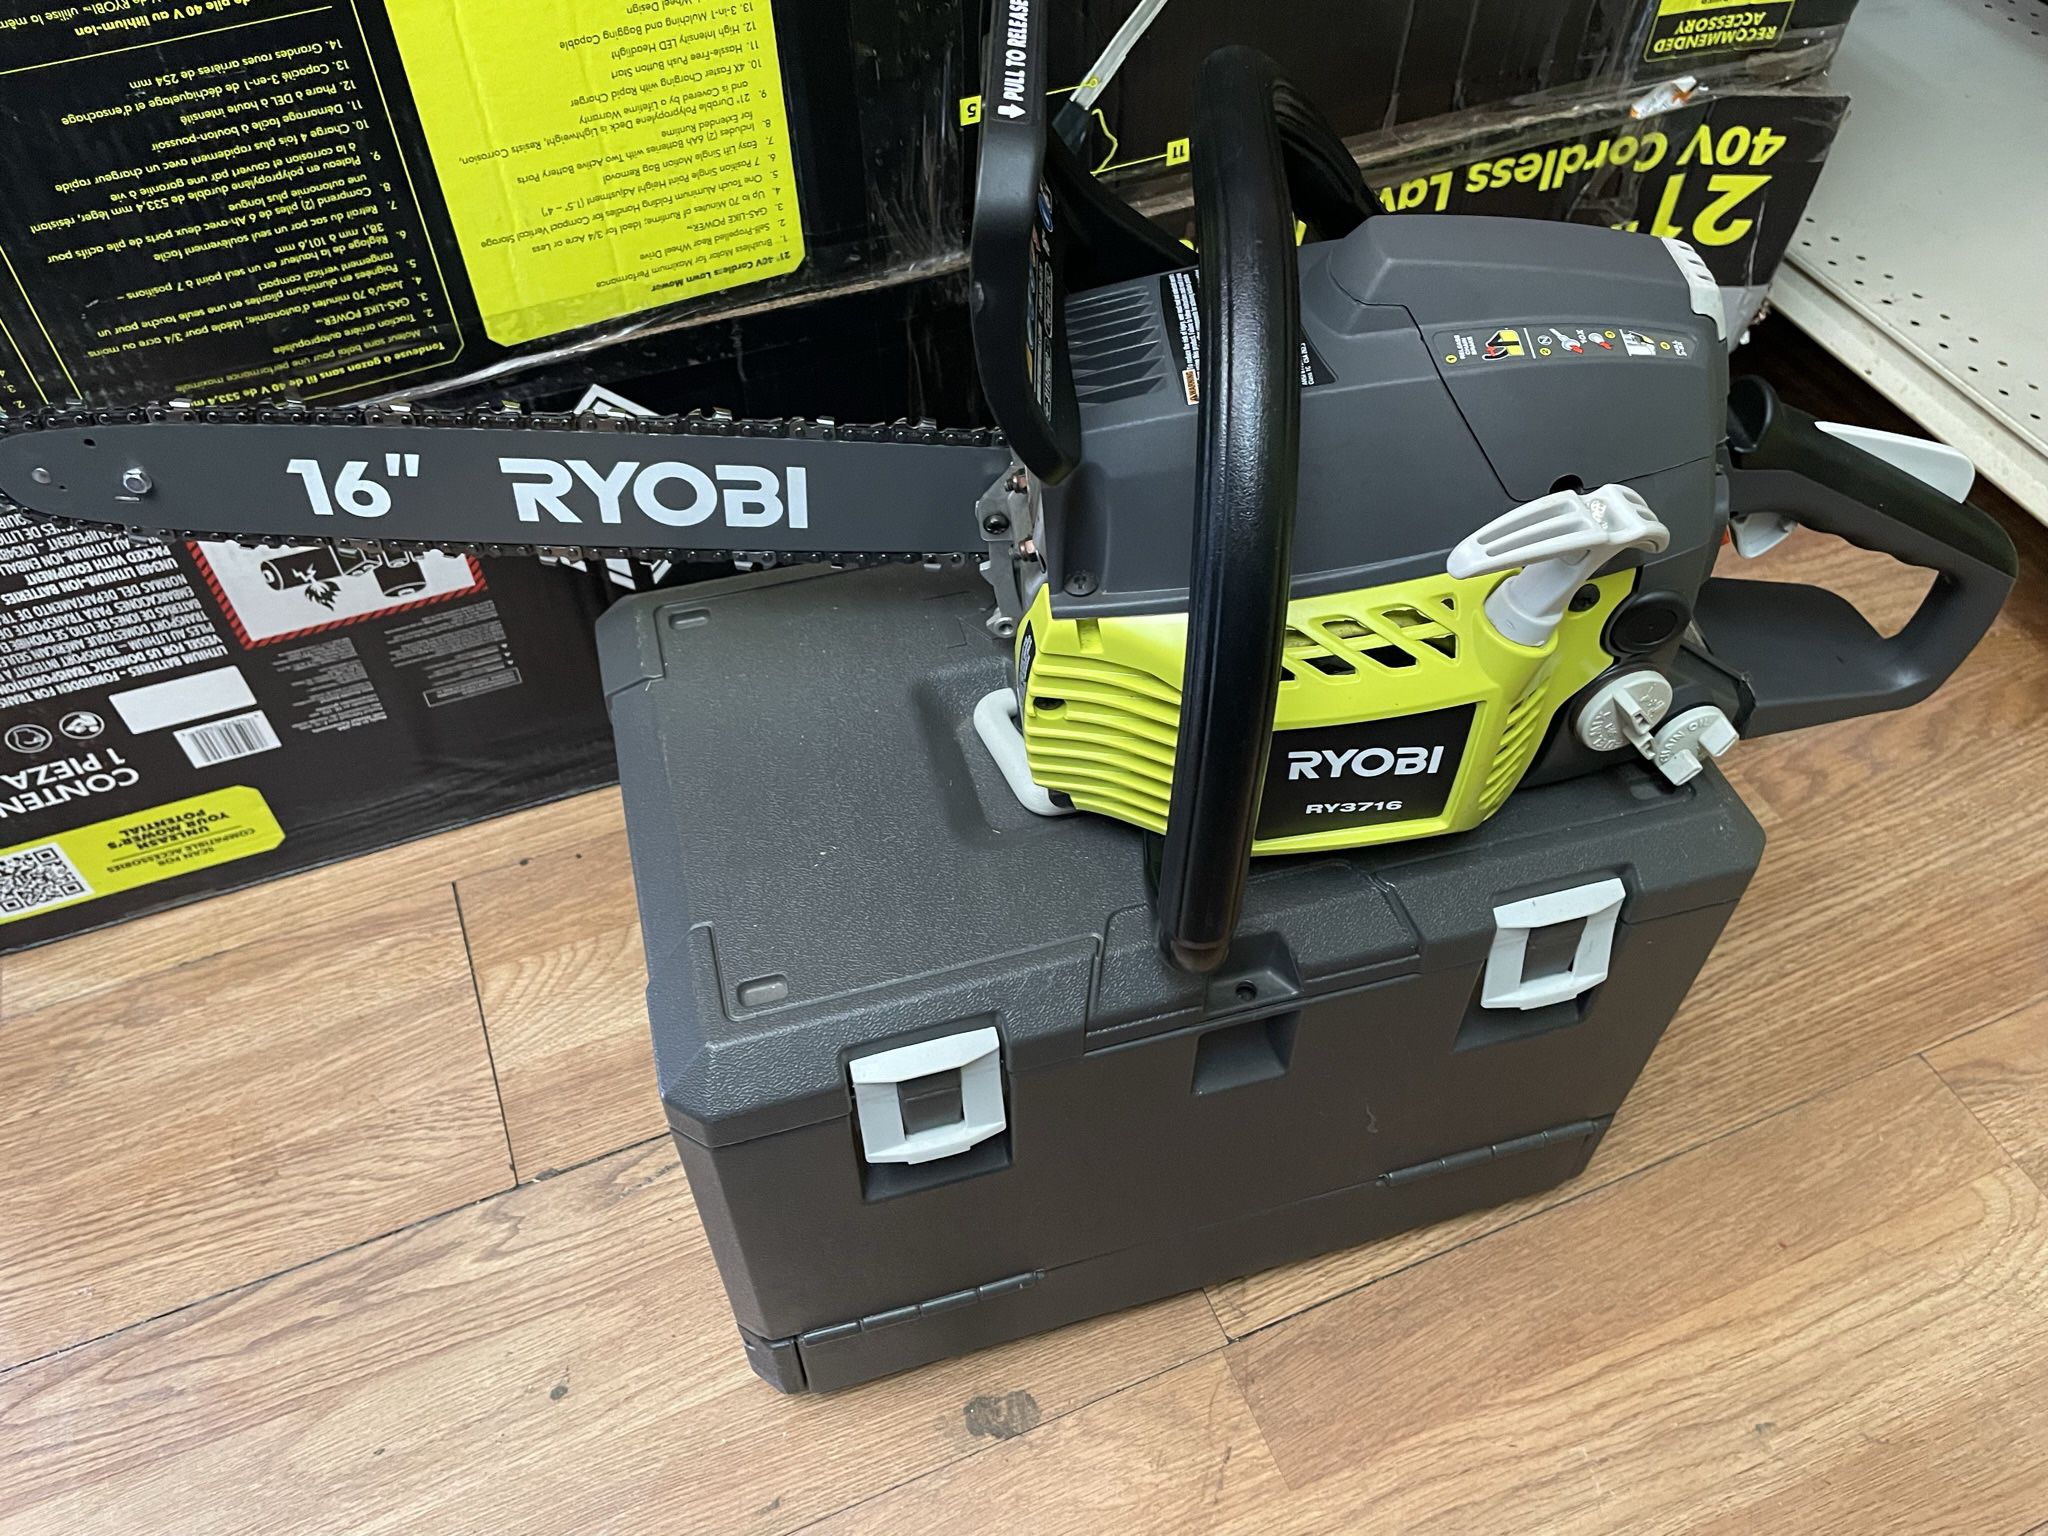 RYOBI 16 in. 37cc 2-Cycle Gas Chainsaw with Heavy-Duty Case